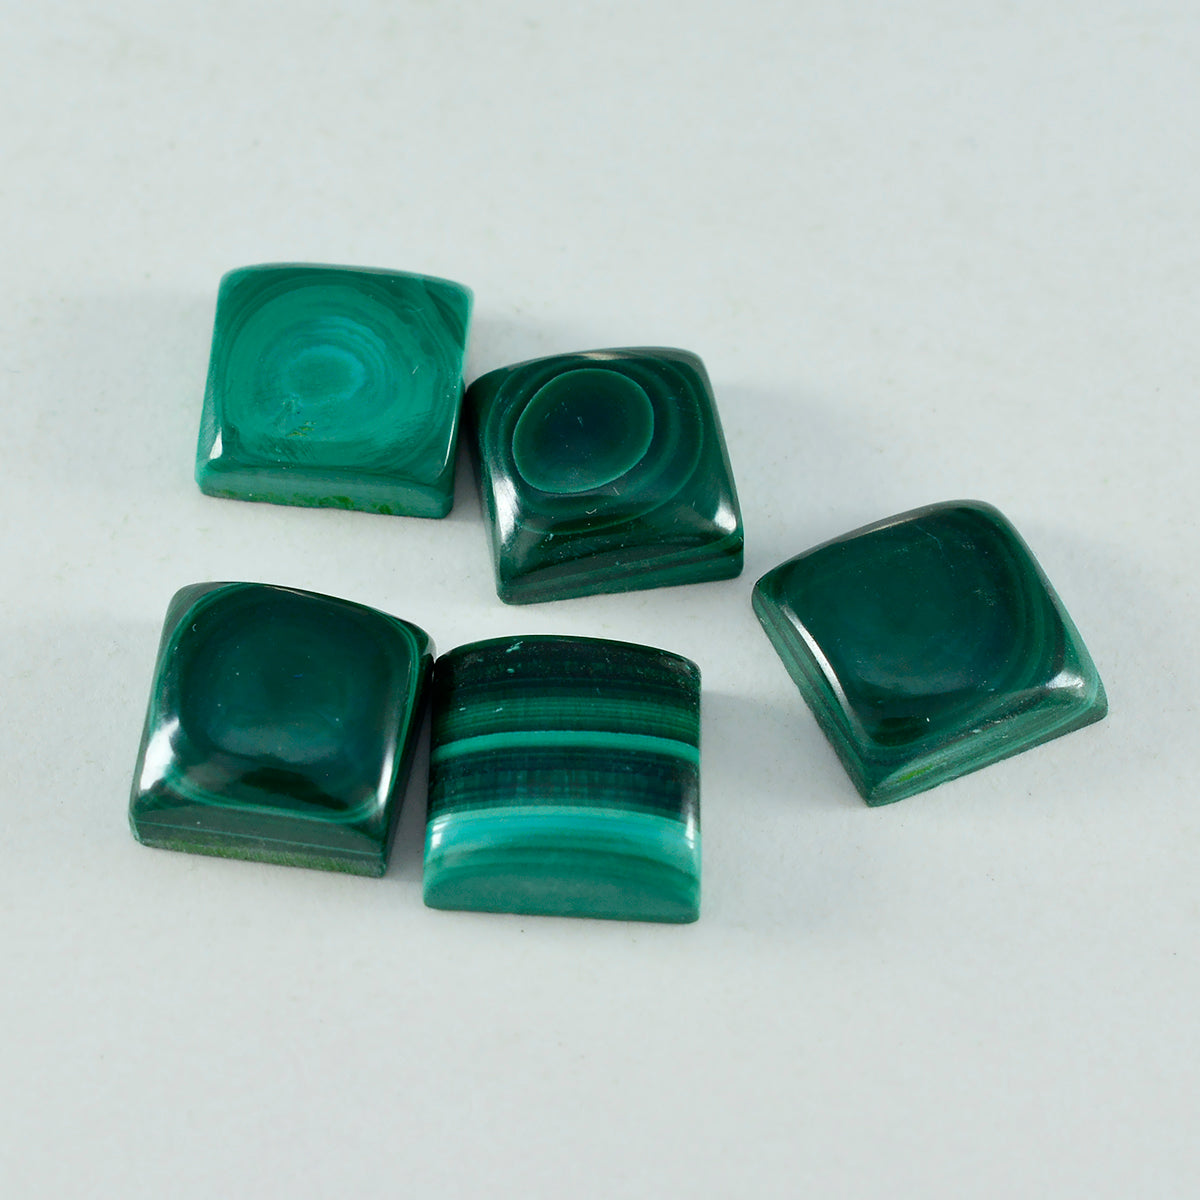 riyogems 1pc グリーン マラカイト カボション 11x11 mm 正方形の形状 aaa 品質ルース宝石